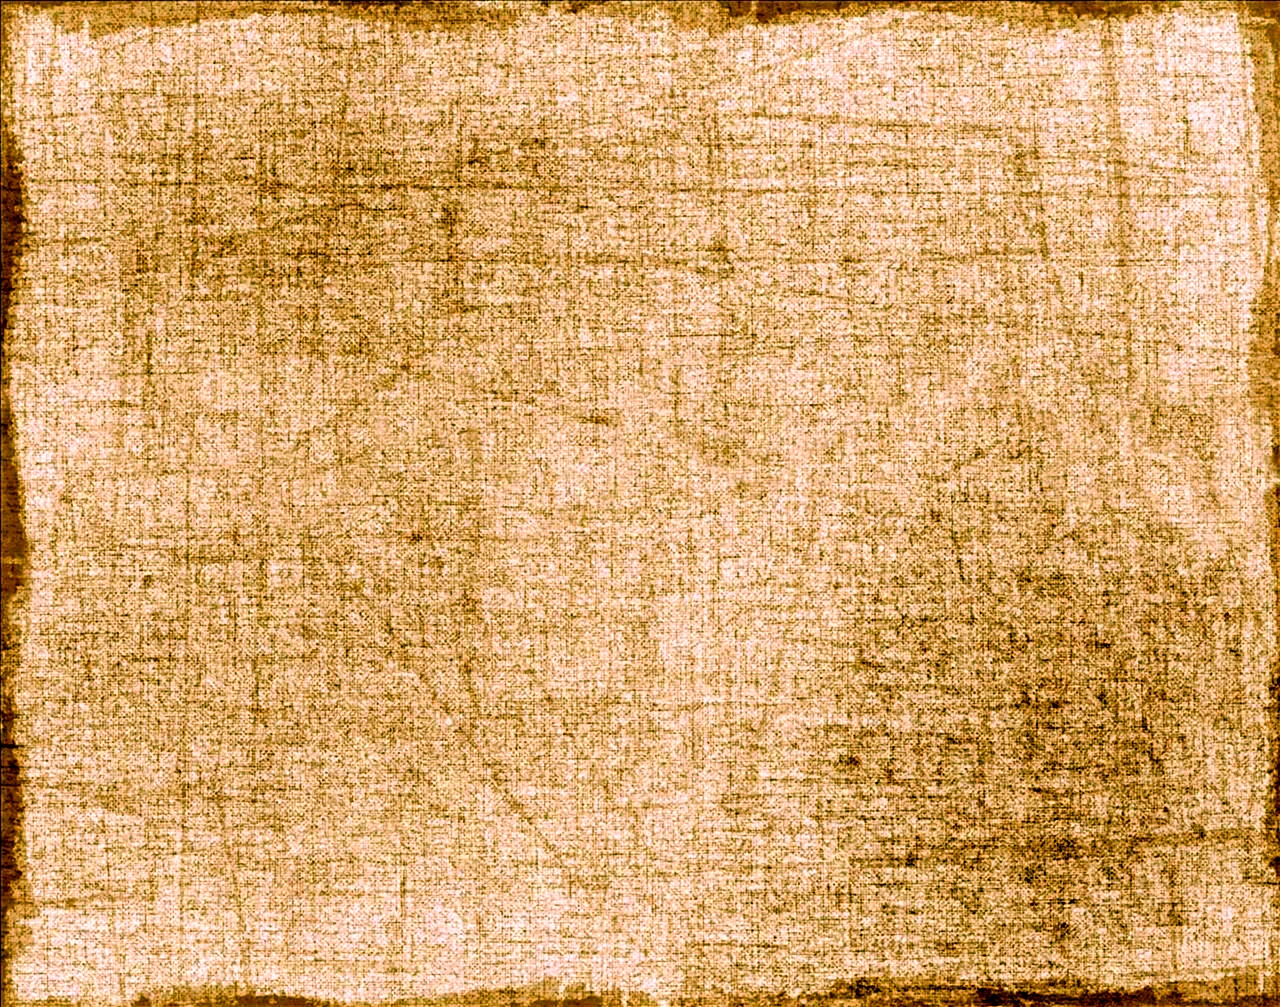 Бумага 18 века